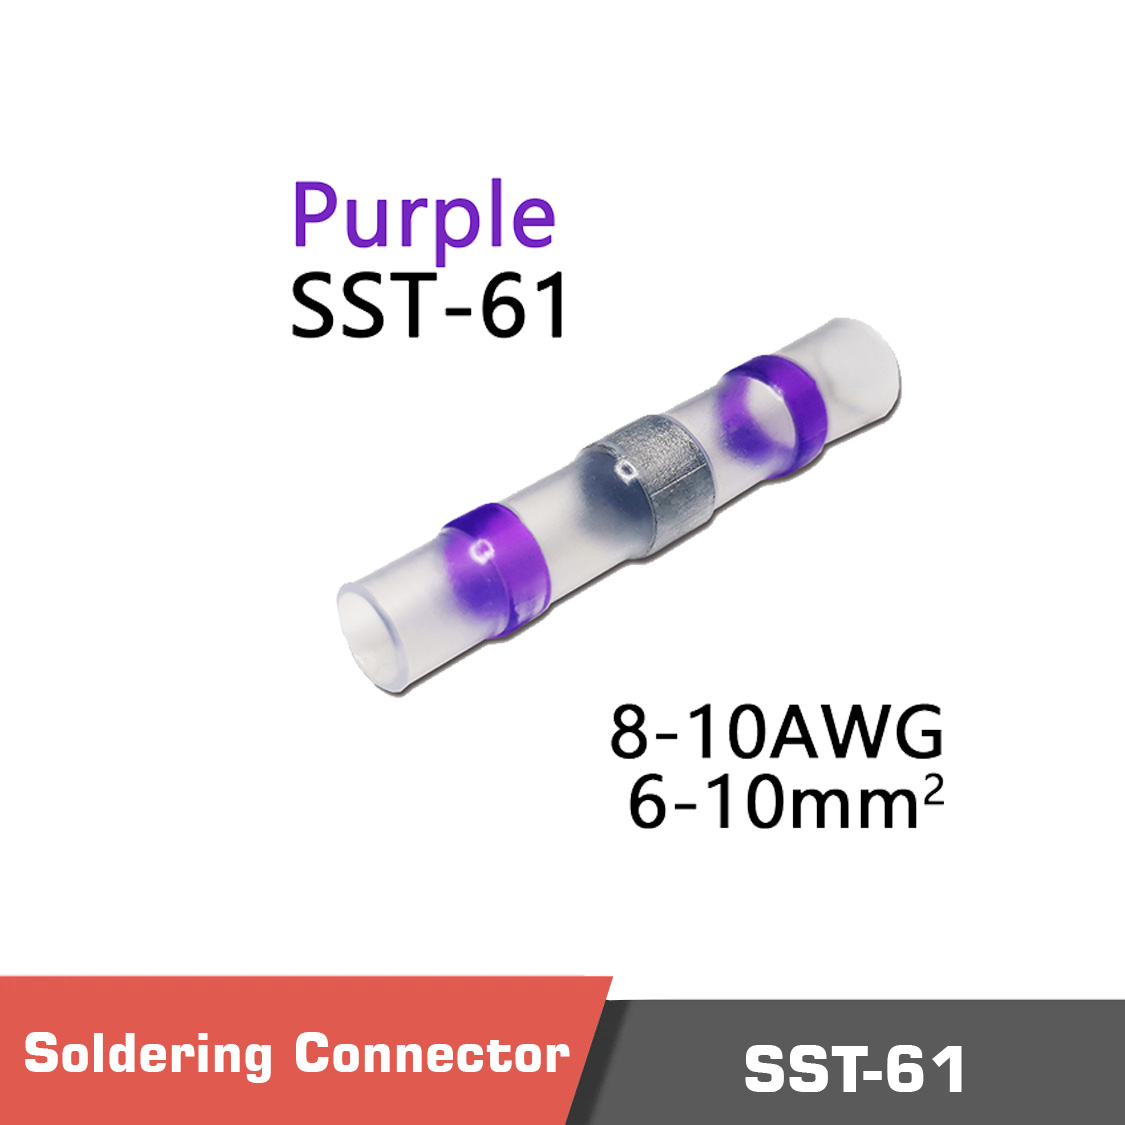 SST 61 - SST-51,SST-51 Soldering Connector,Soldering Connector - MotioNew - 14